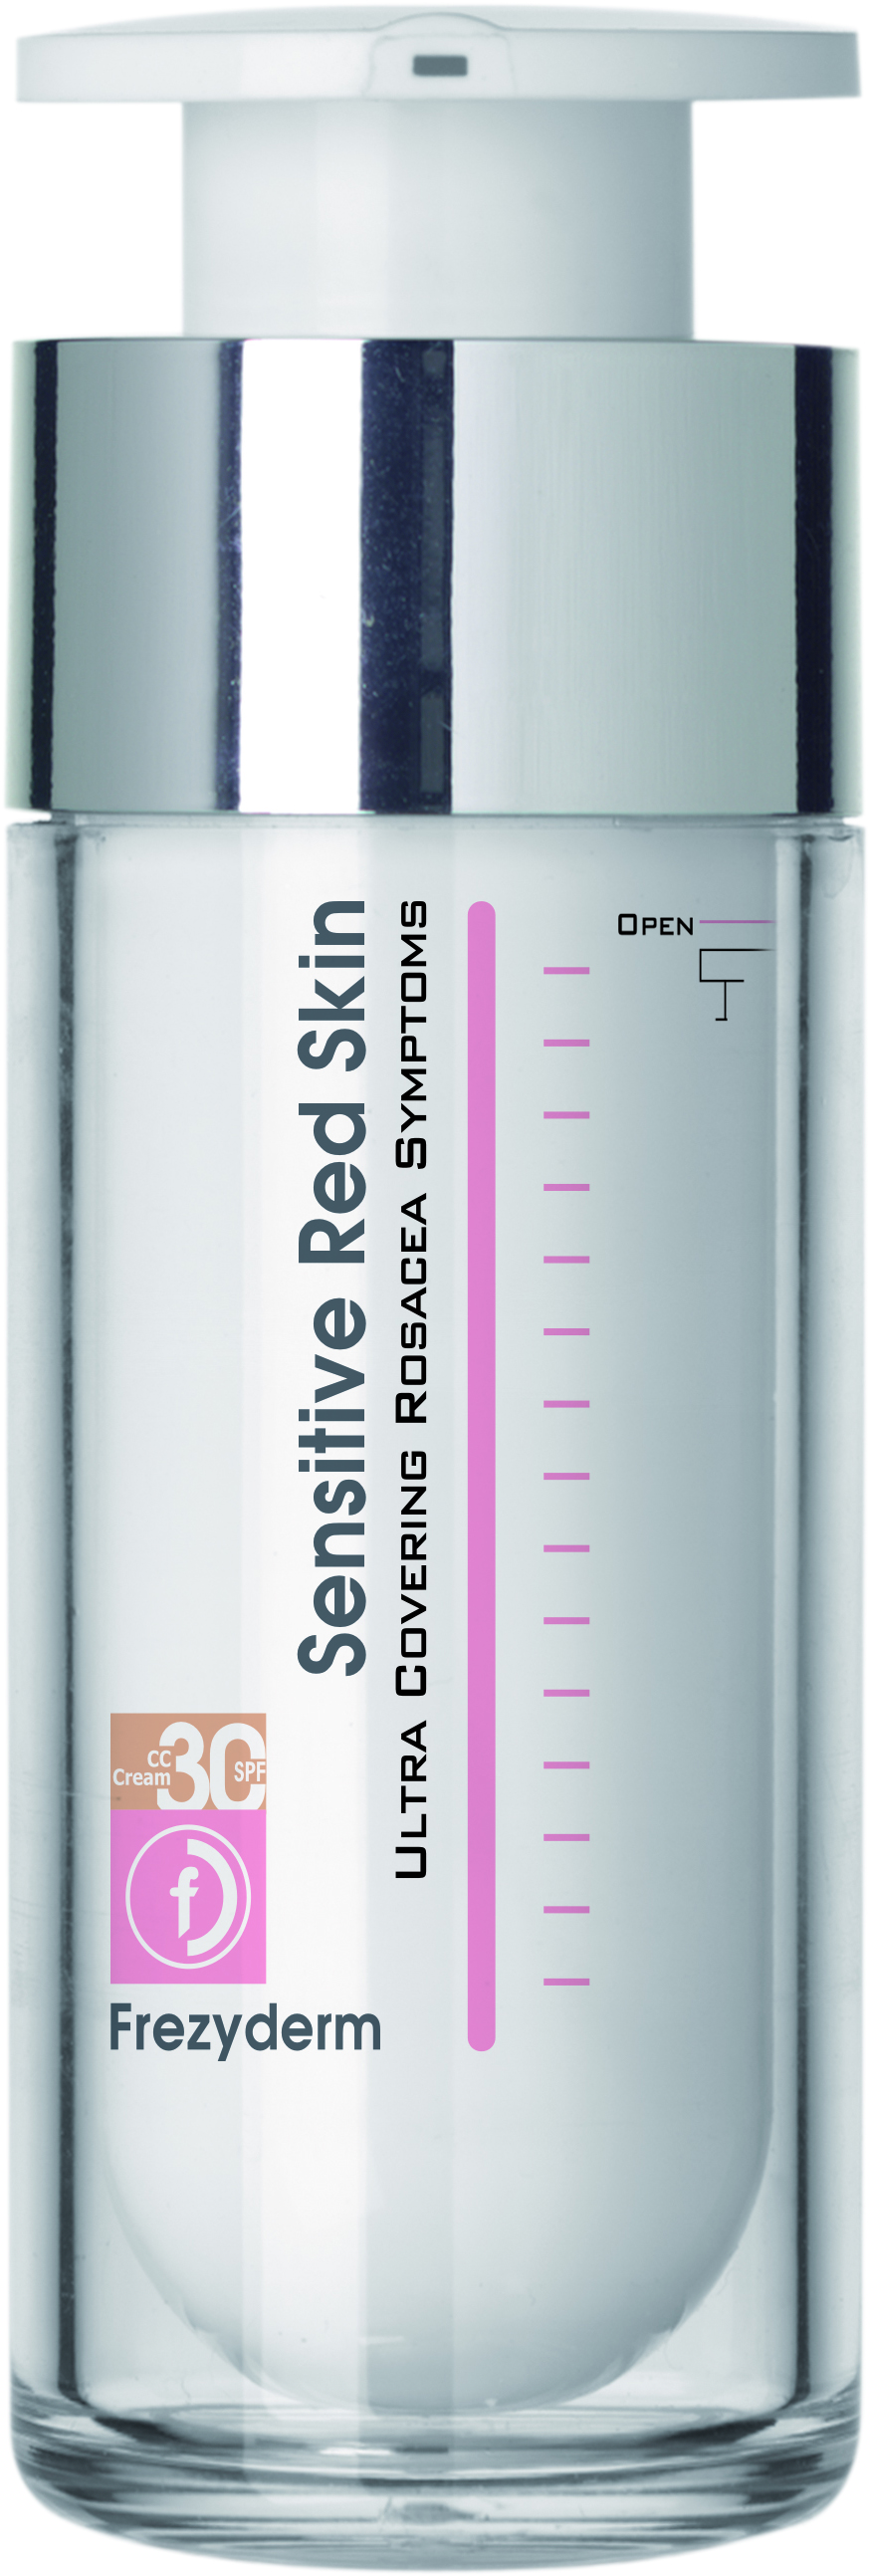 Frezyderm Sensitive Red Skin Tinted SPF 30 Cream